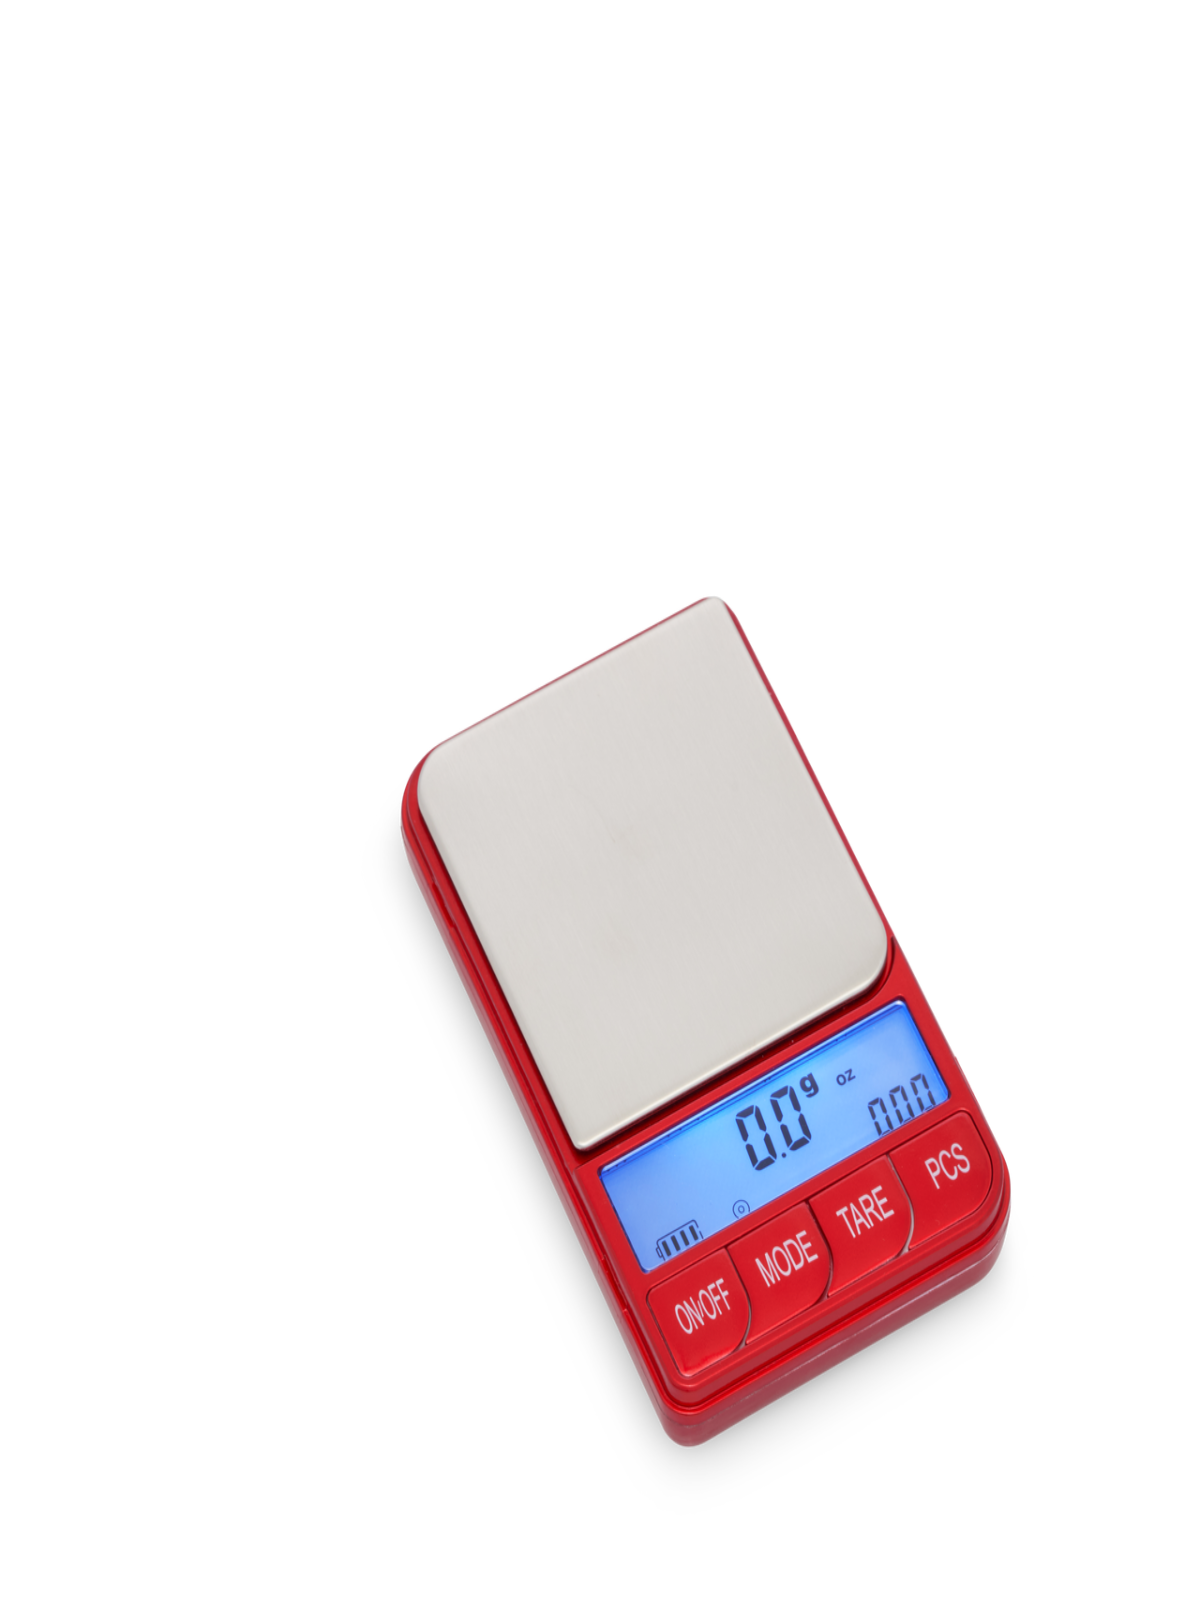 American Weigh Scales HB-11 Digital Black Scale Wth Bowl